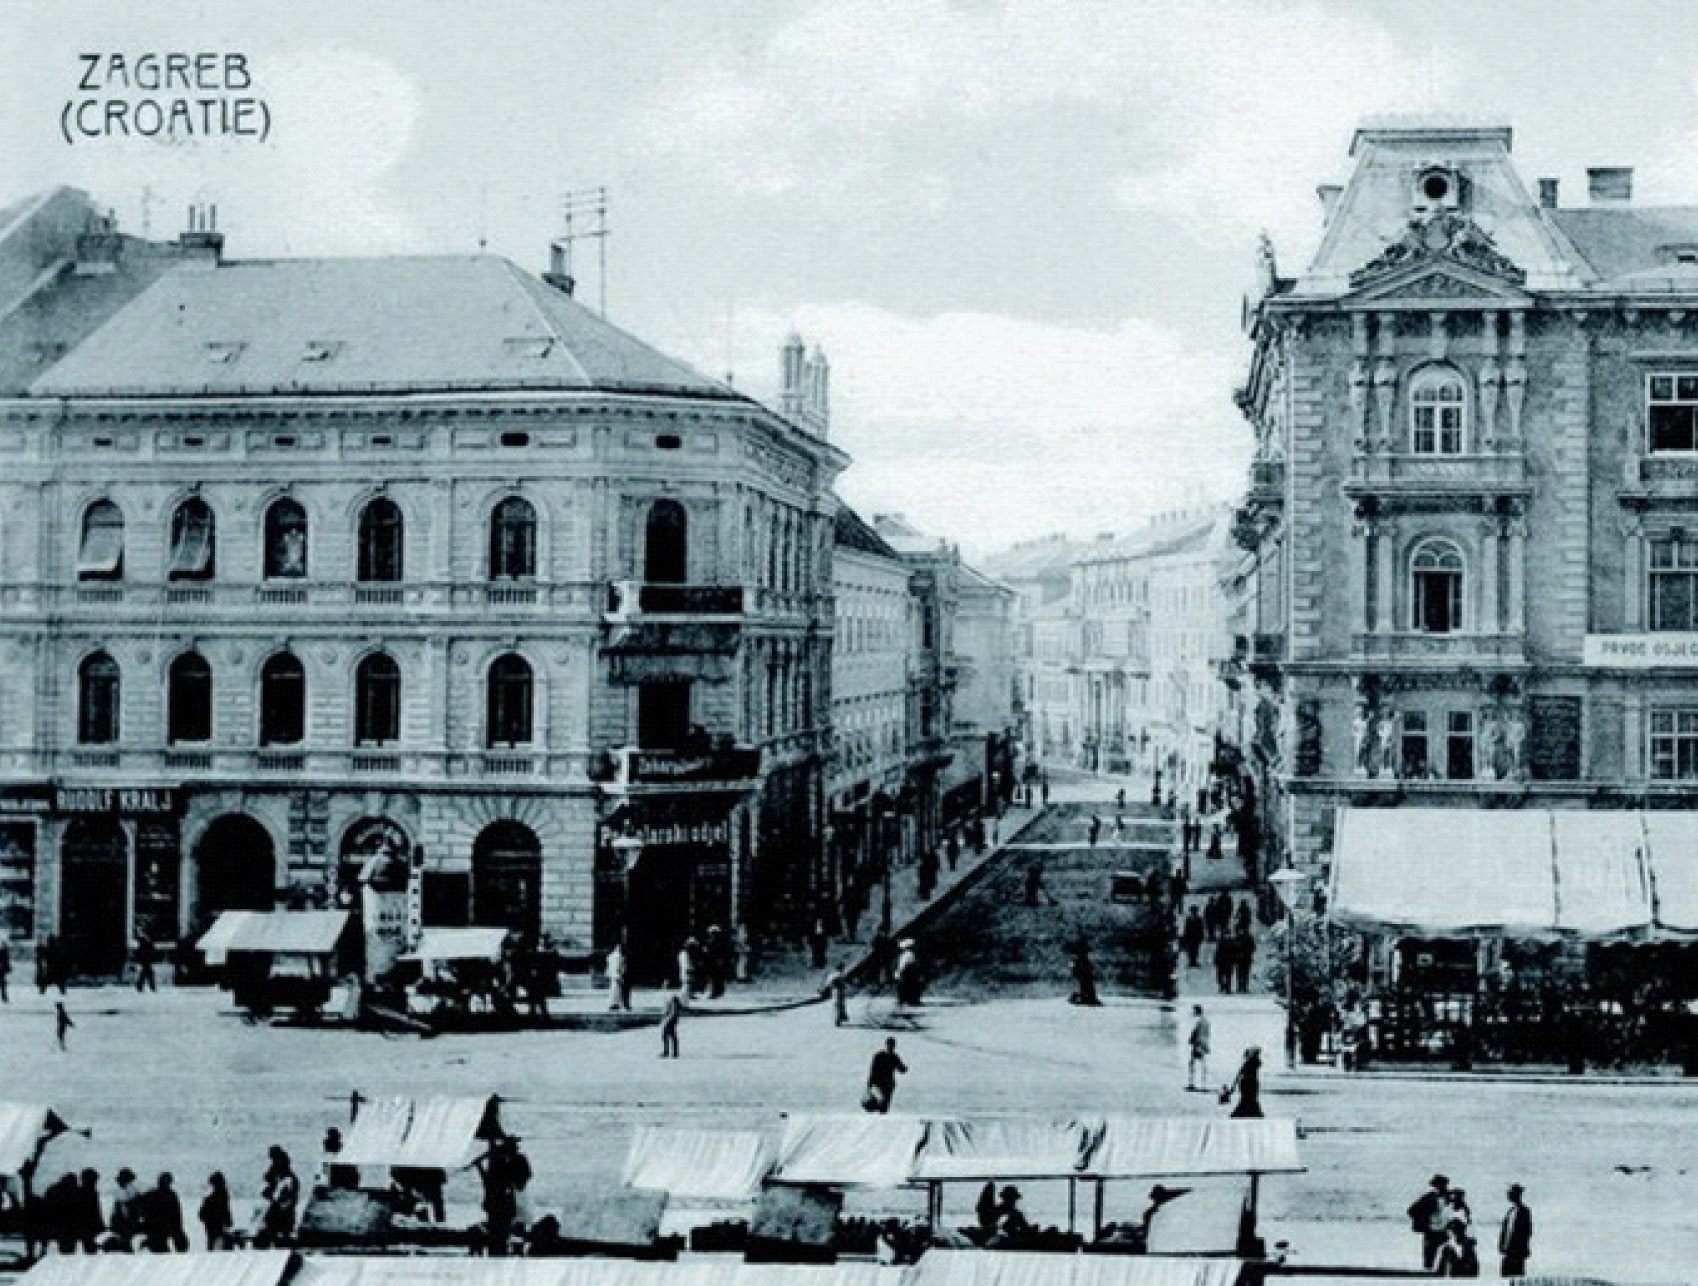 Ban Jelačić Platz